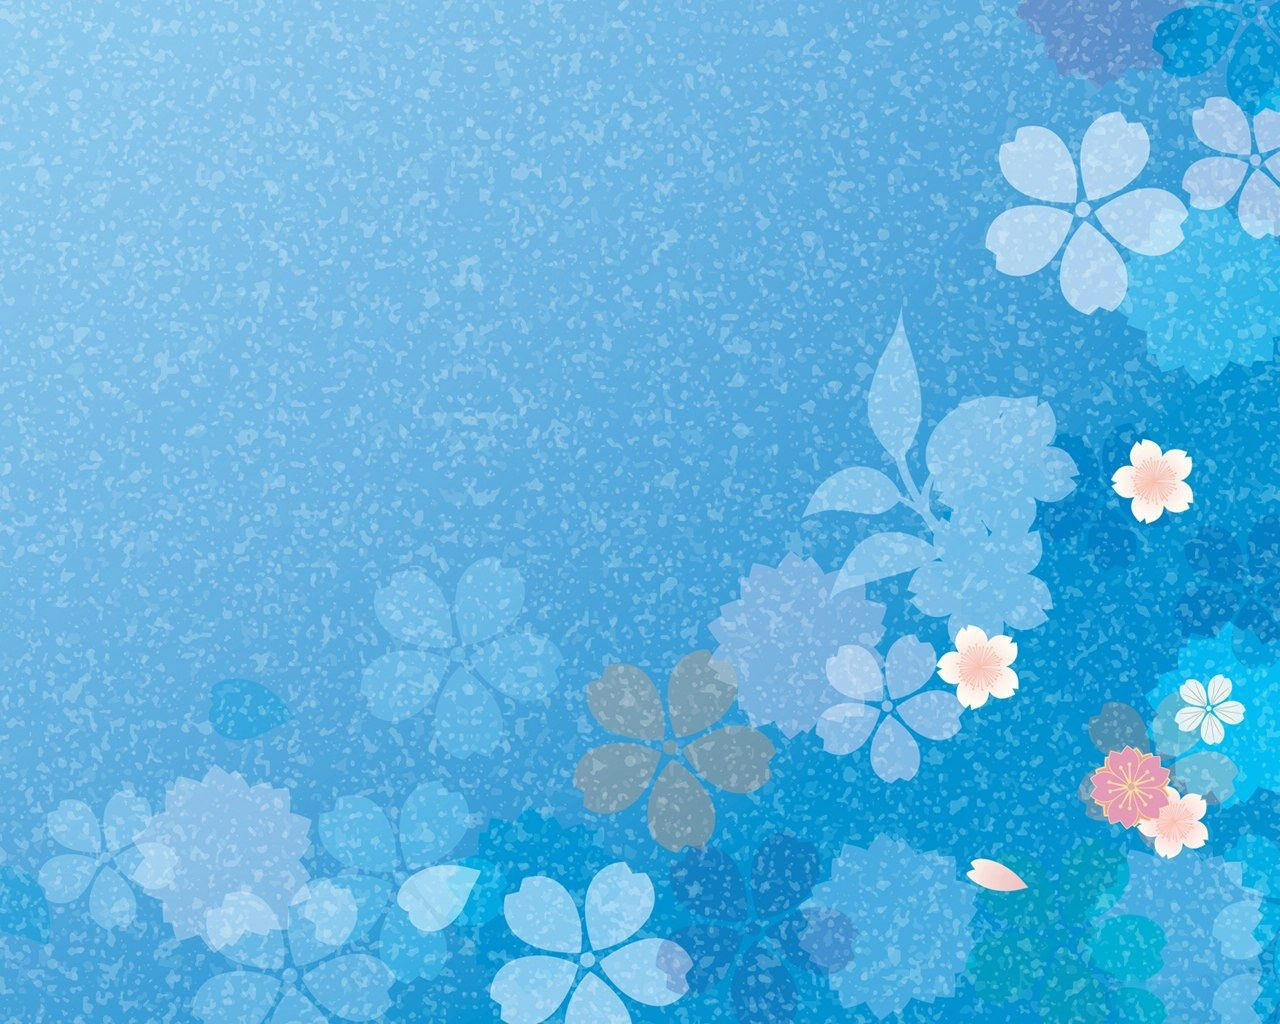 20 Blue Flower Backgrounds Wallpapers FreeCreatives